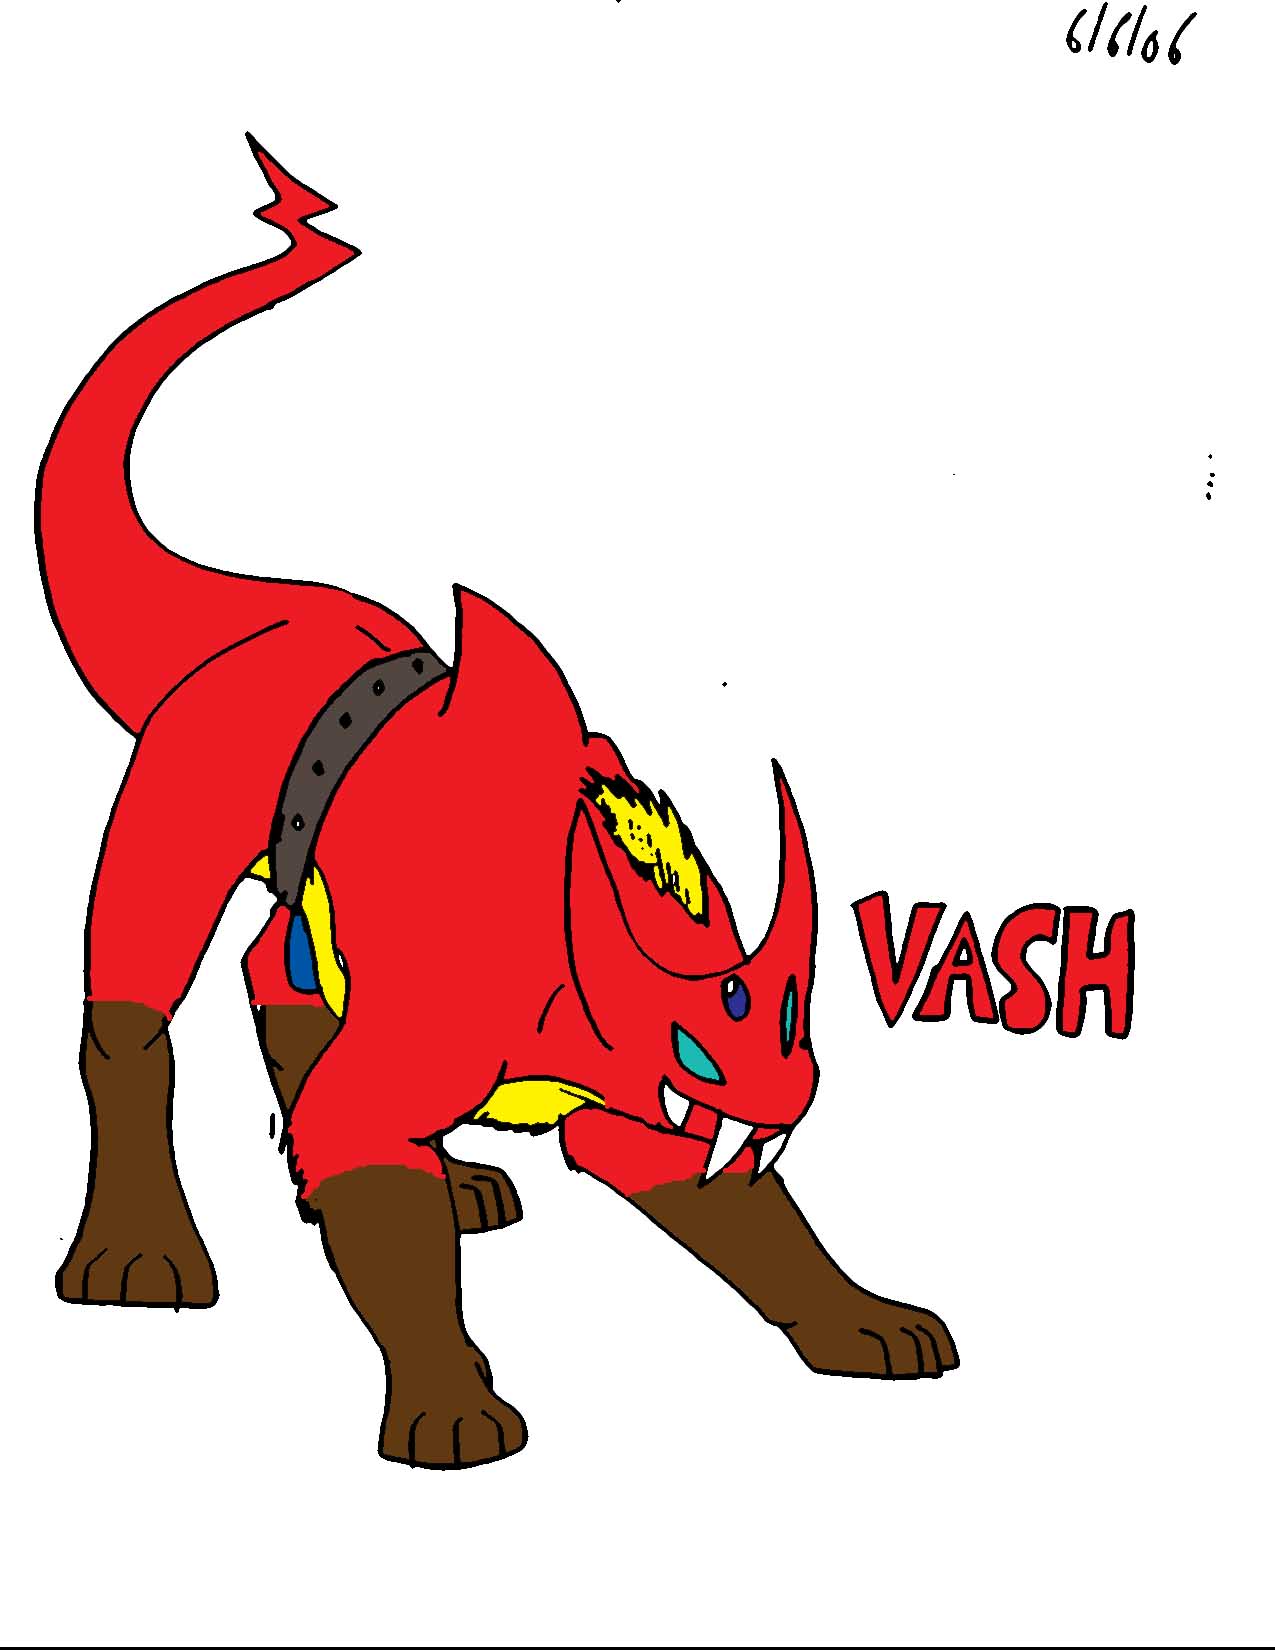 Vash Again! by crocdragon89